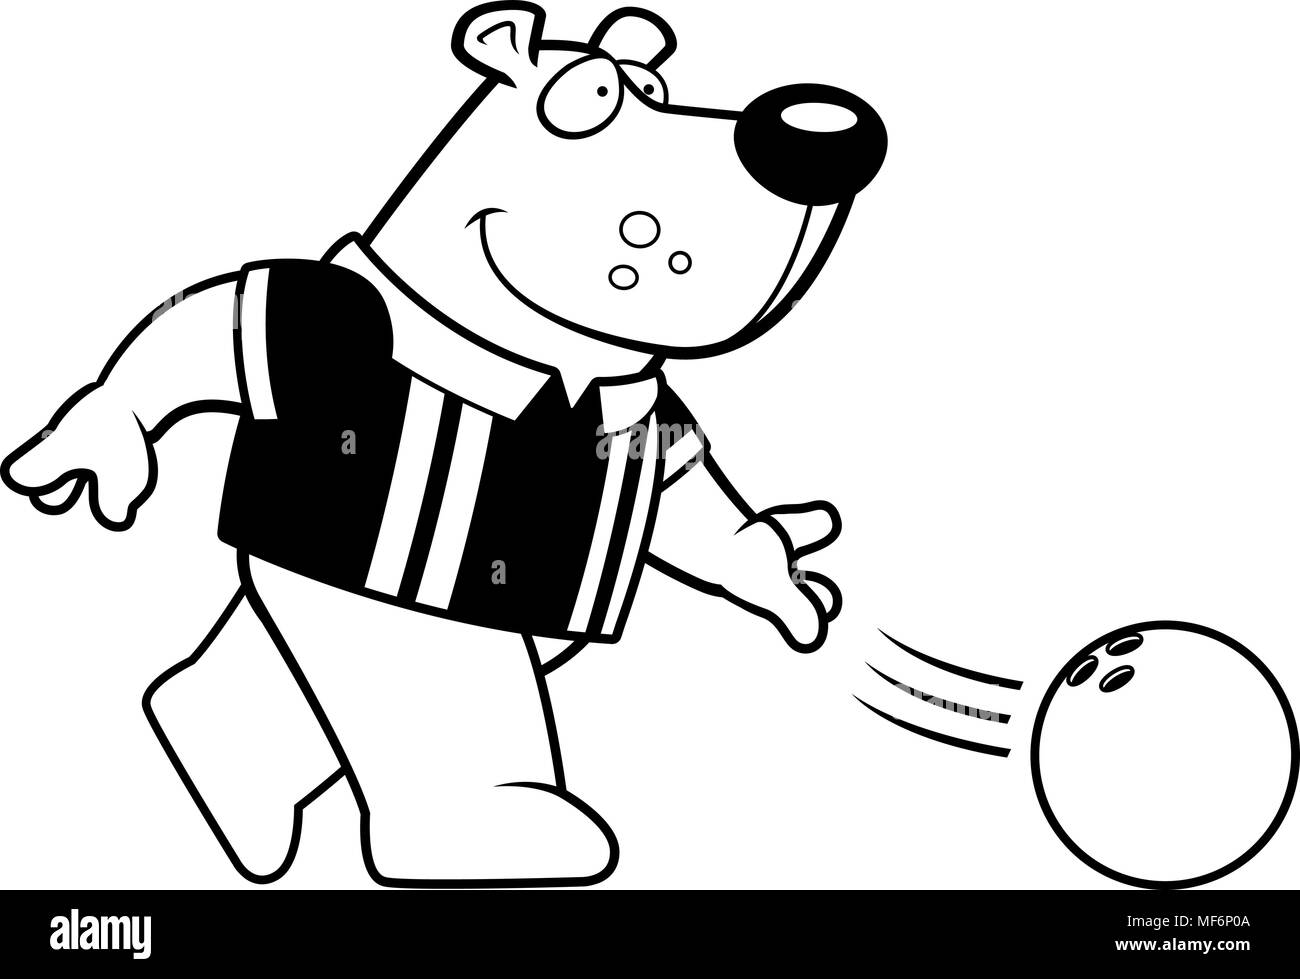 A cartoon illustration of a bear bowling a ball. Stock Vector